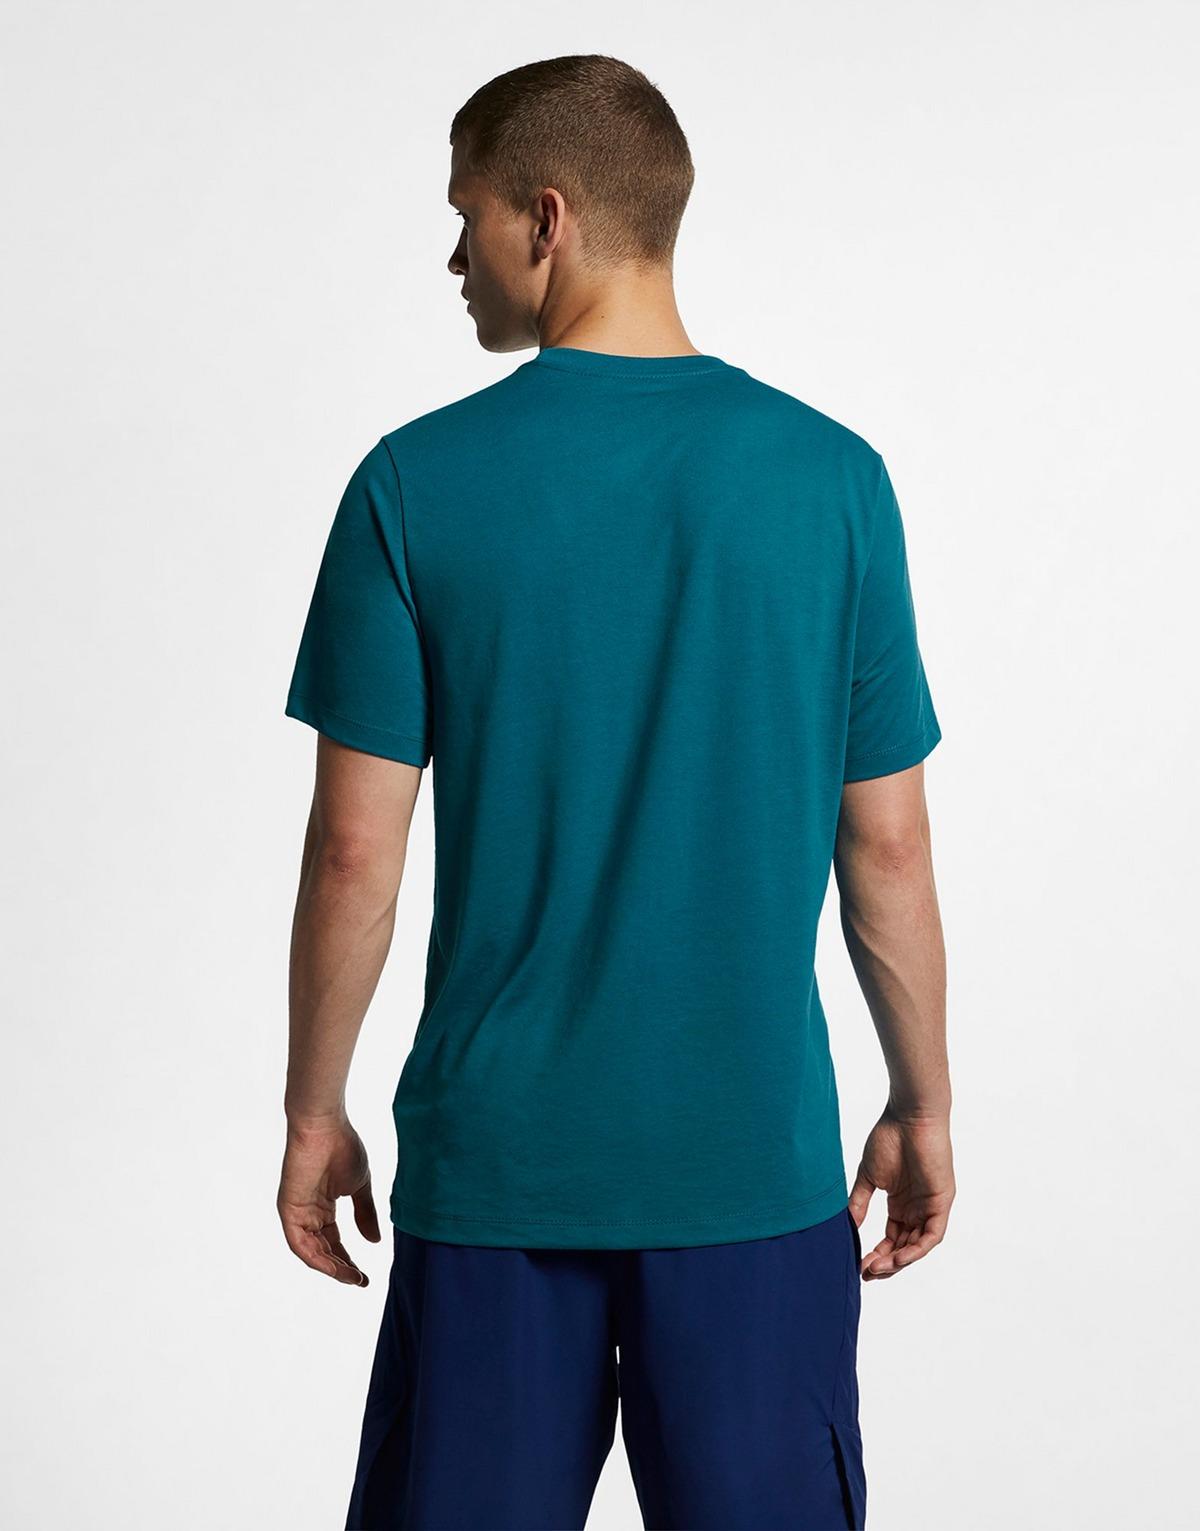 Buy > nike athlete t shirt green > in stock